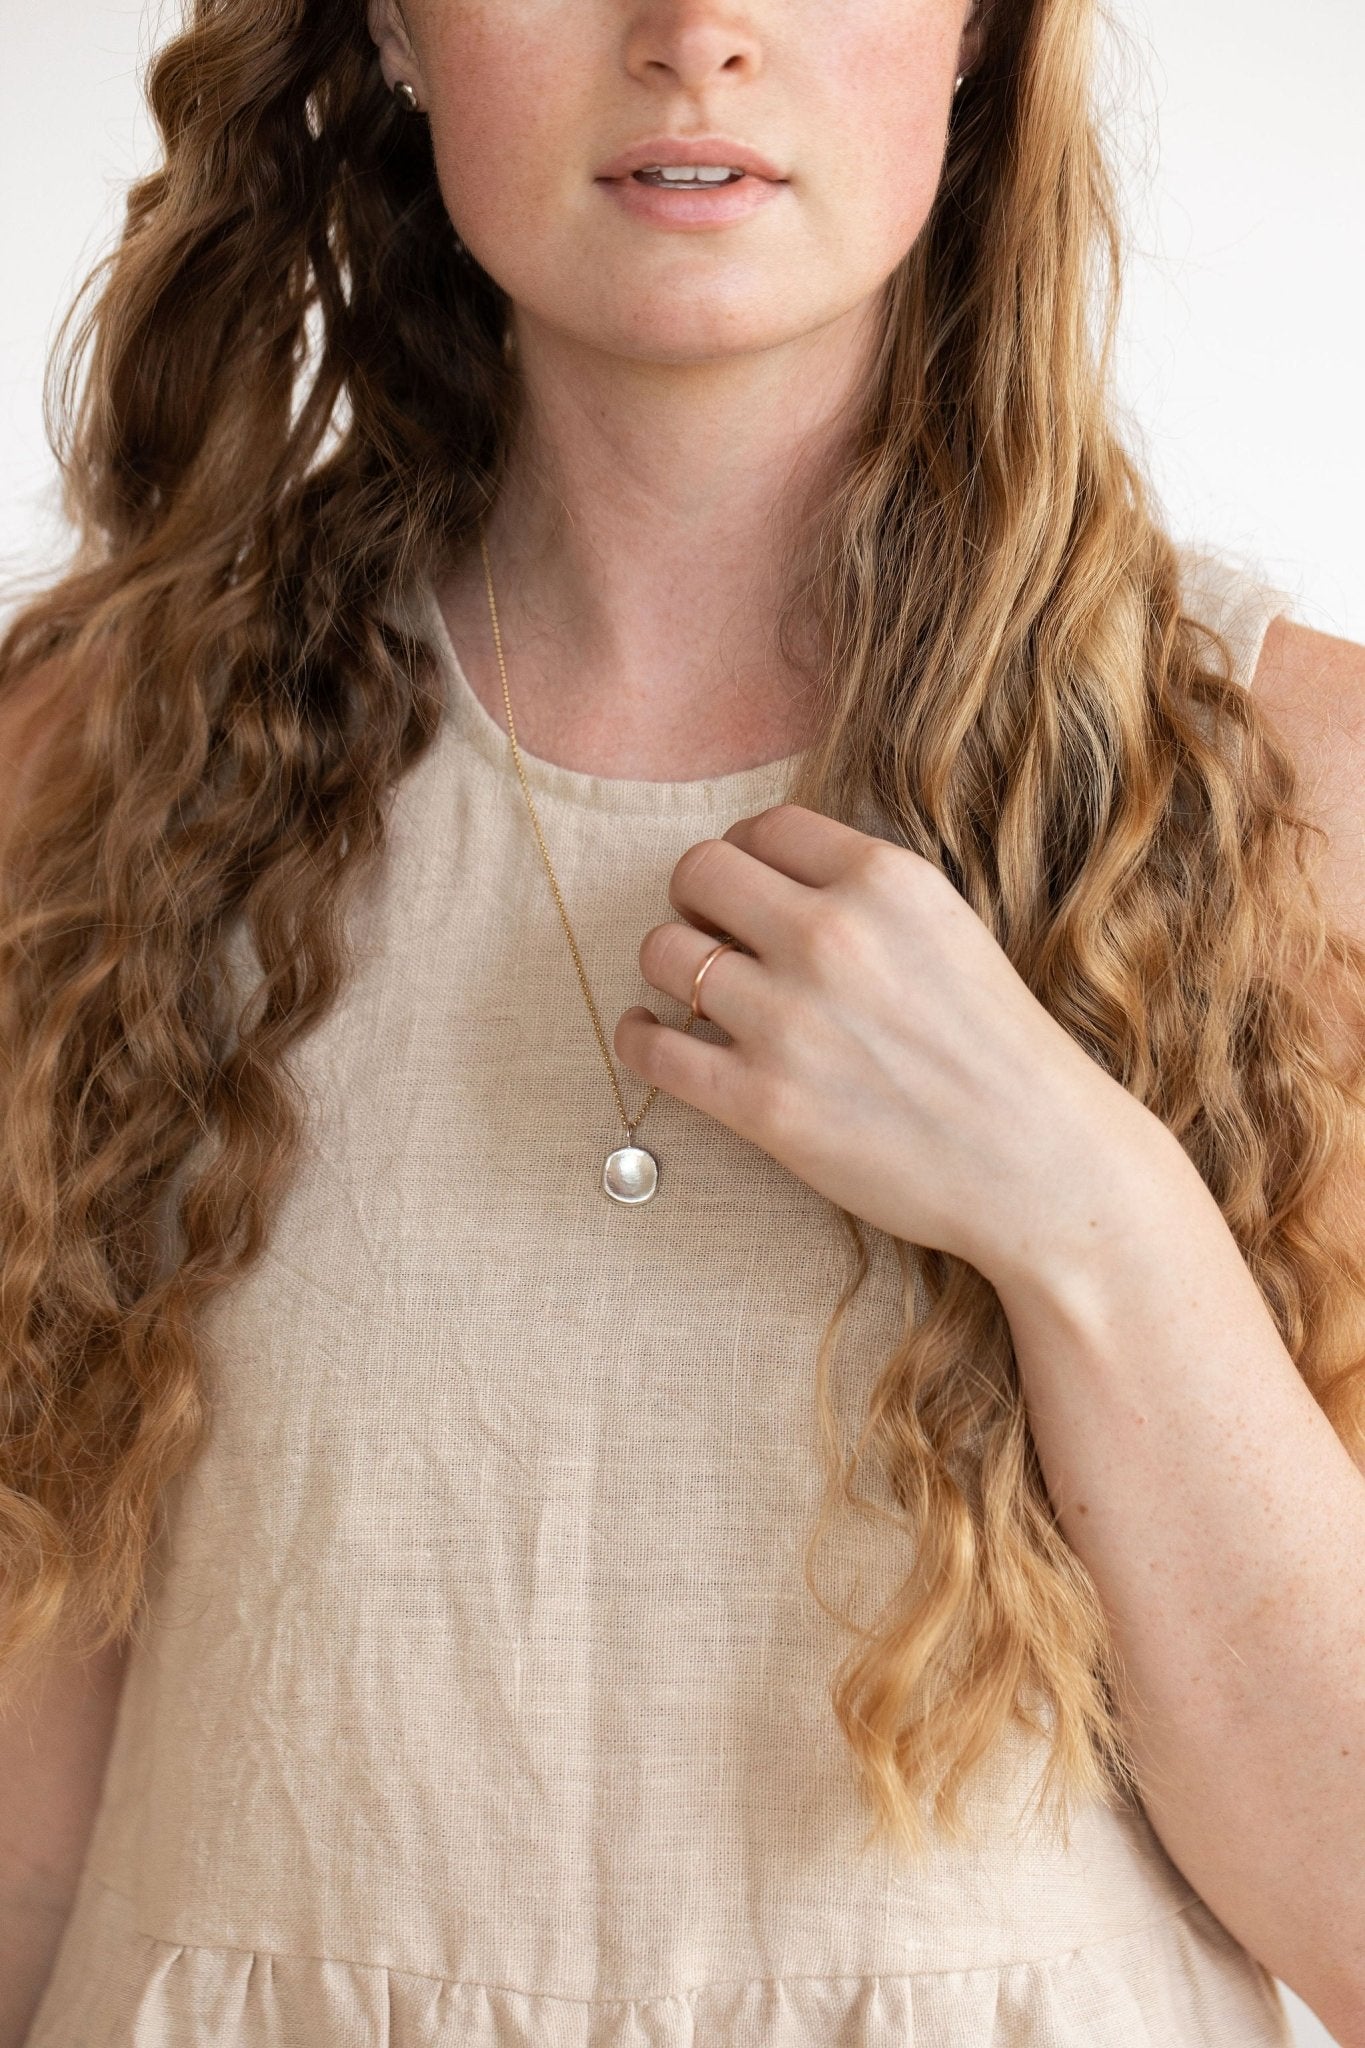 Organic Molten Pendant Necklace - Sheena Marshall